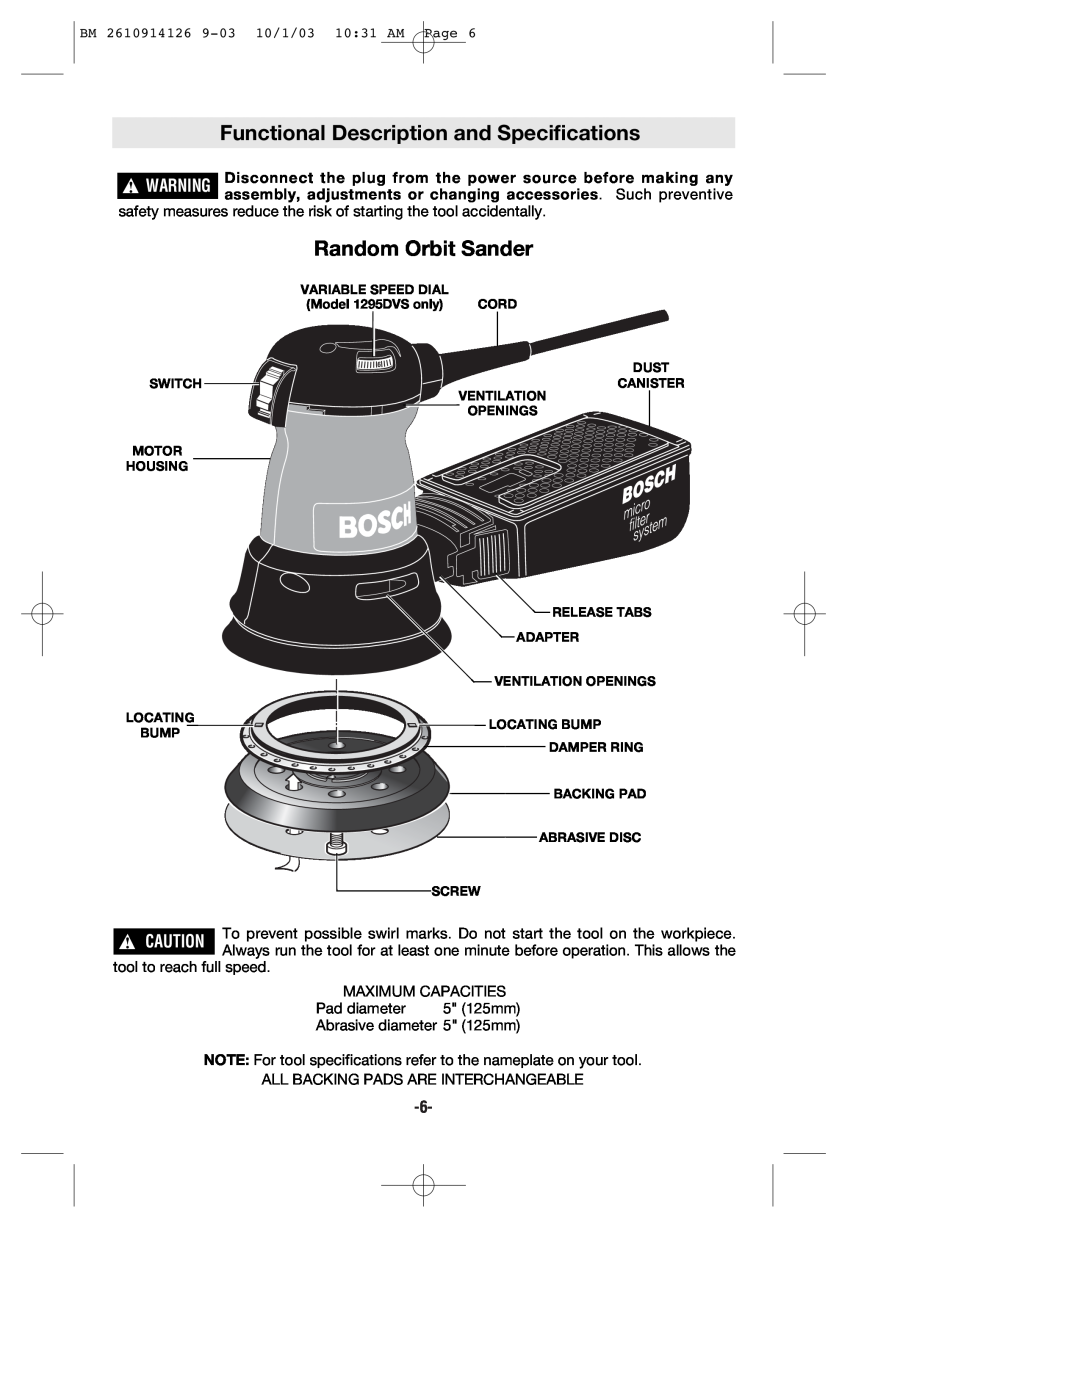 Bosch Power Tools 1295DH, 1295DP, 1295DVS manual Functional Description and Specifications, Random Orbit Sander 